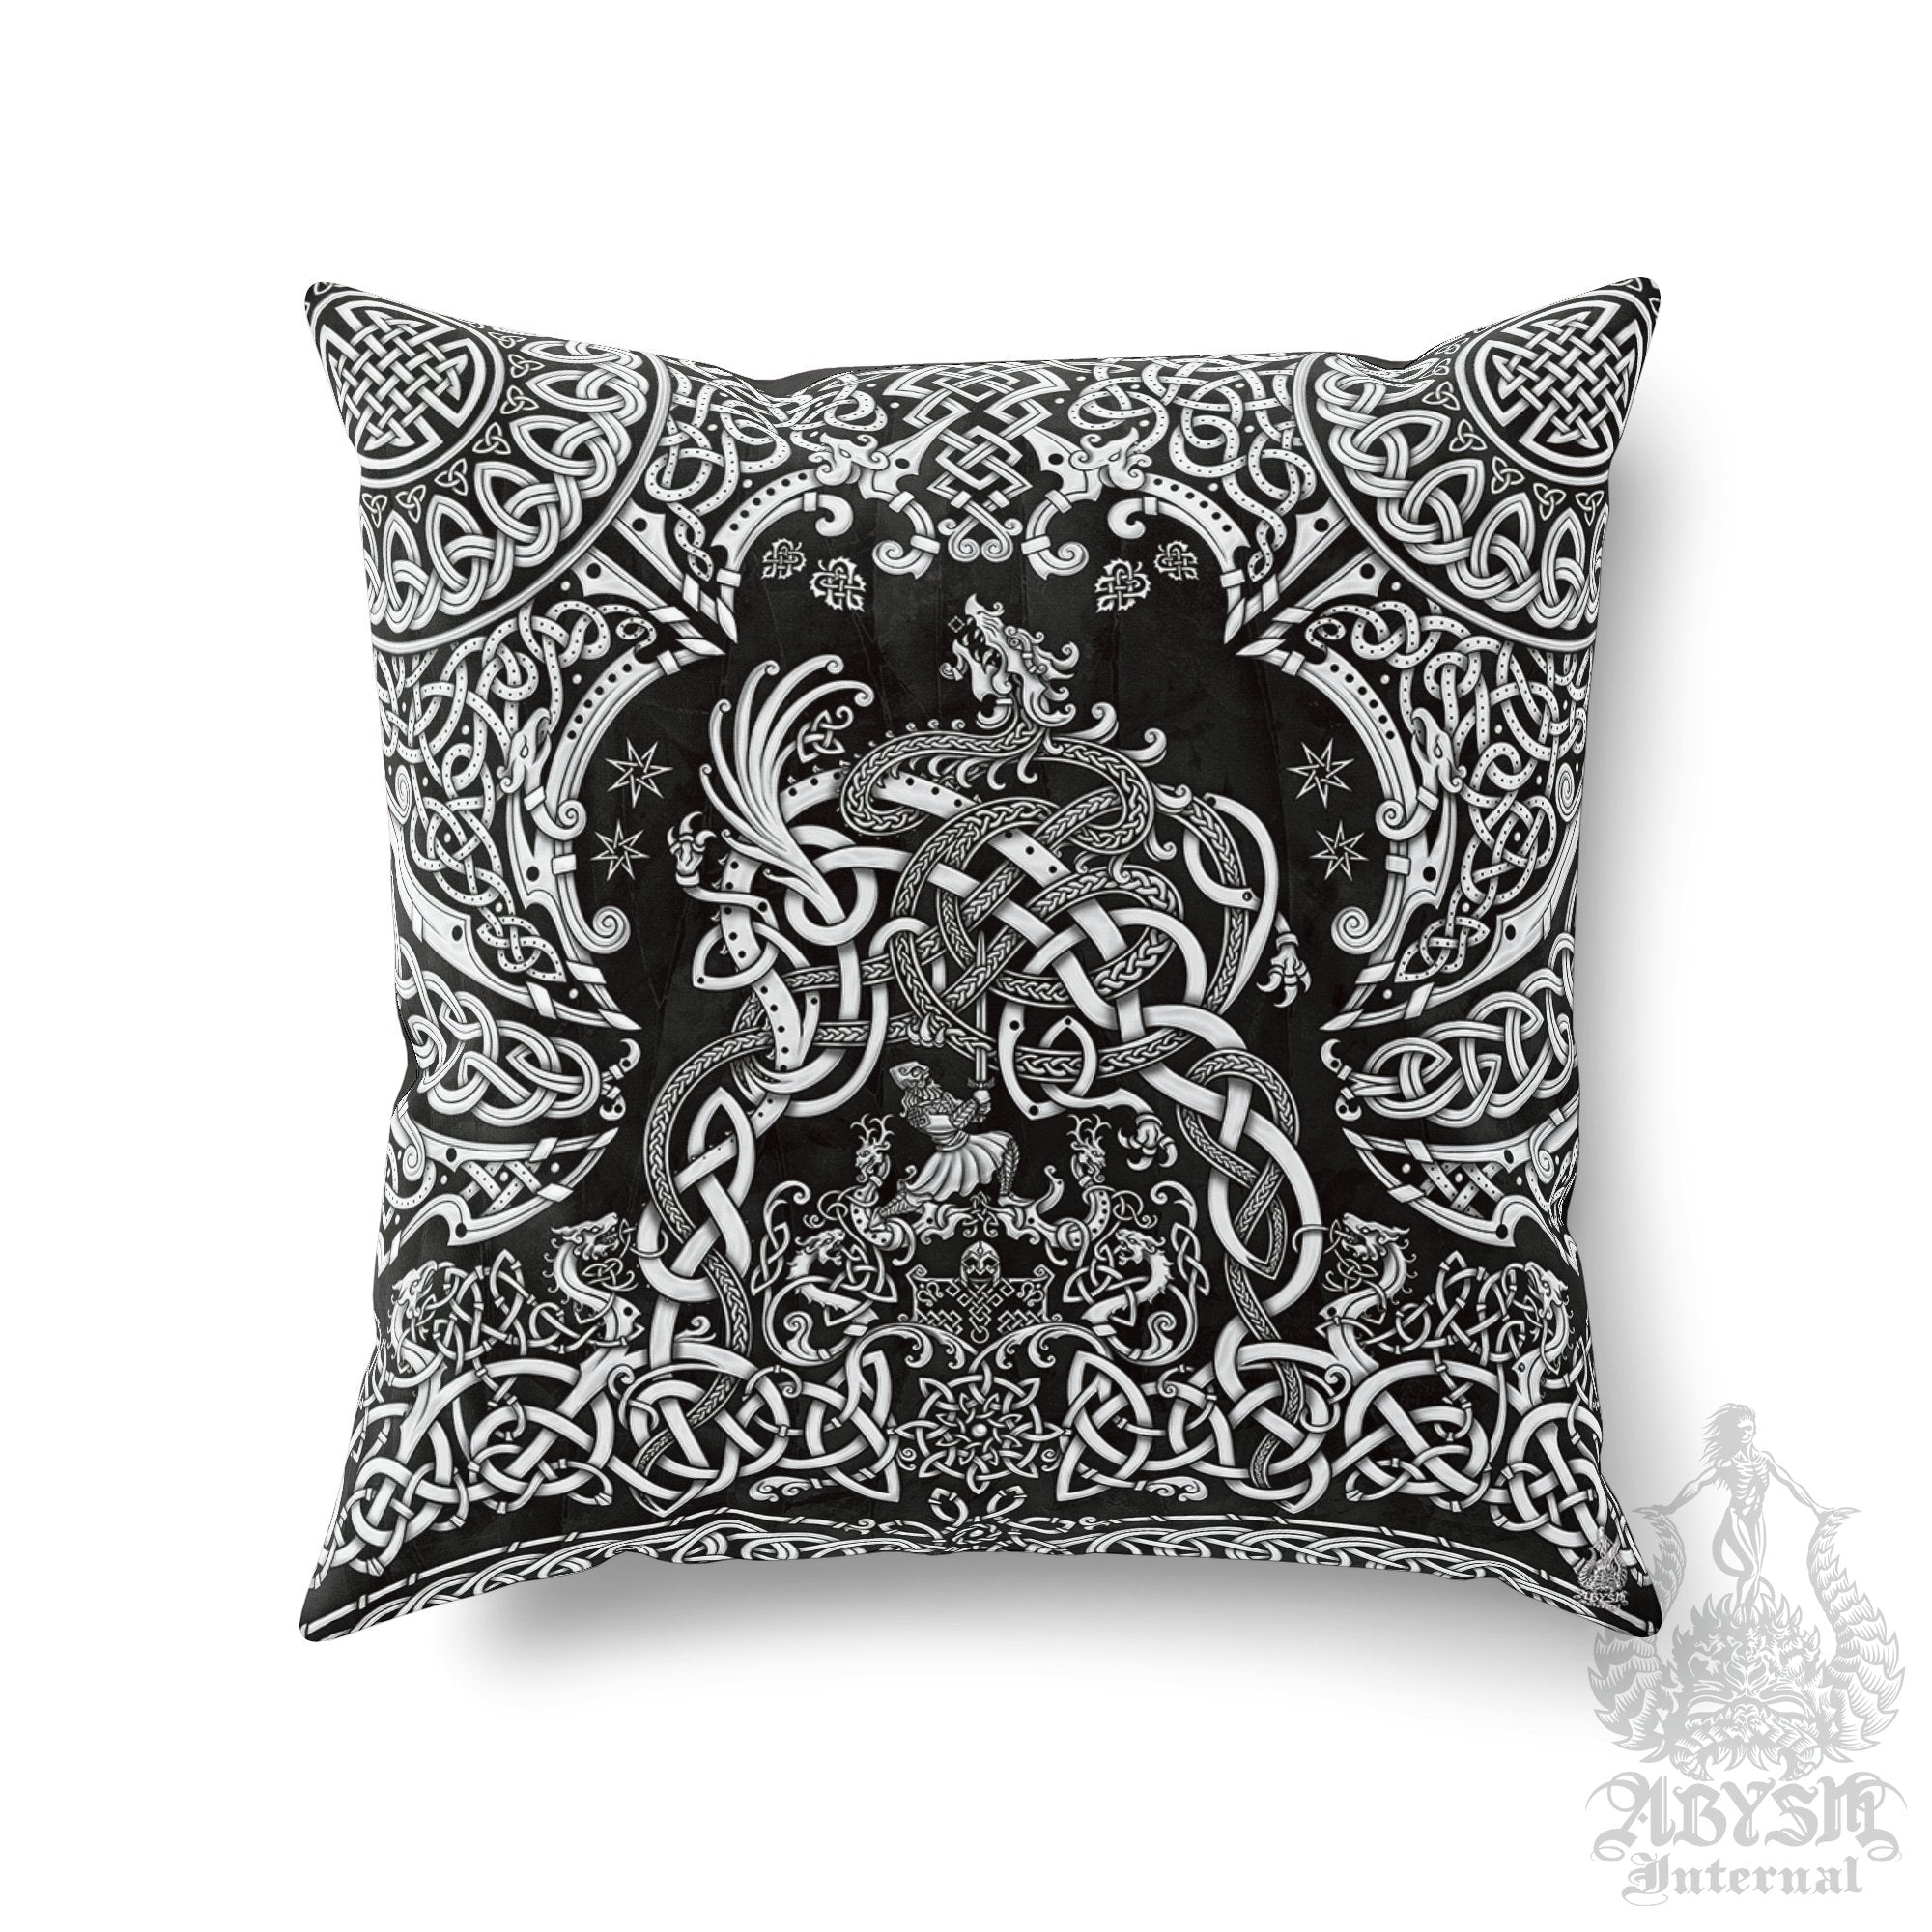 Viking Throw Pillow, Decorative Accent Pillow, Square Cushion Cover, Gamer Room Decor, Dragon Fafnir, Nordic Art, Alternative Home - White & 3 Colors - Abysm Internal